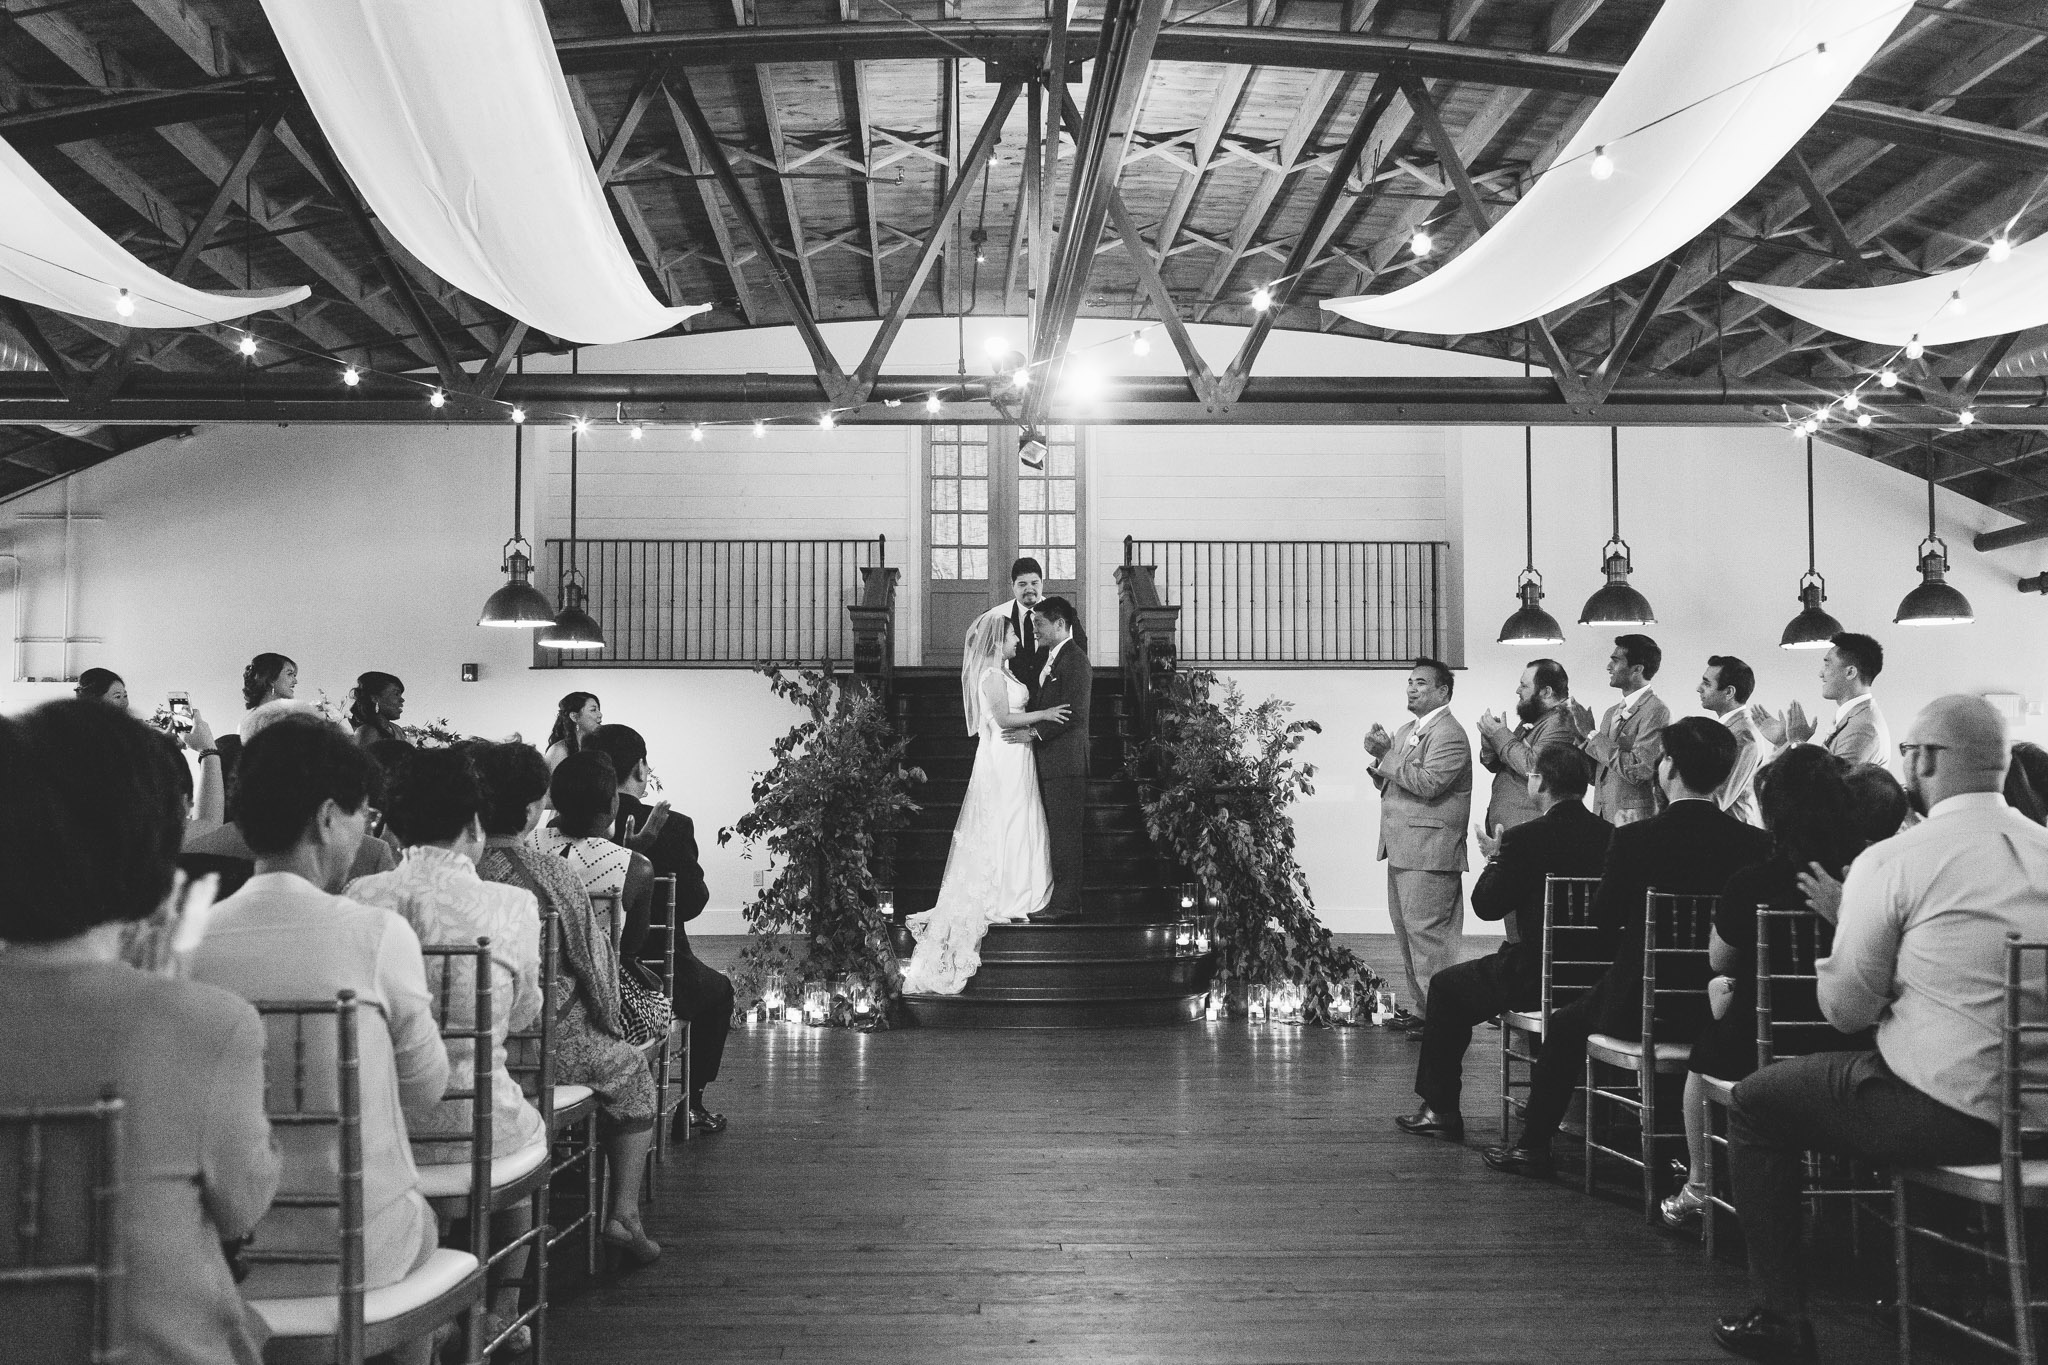 Summerour studio creates a stunning backdrop for any wedding ceremony, says top Atlanta Photographer Rebecca Cerasani.